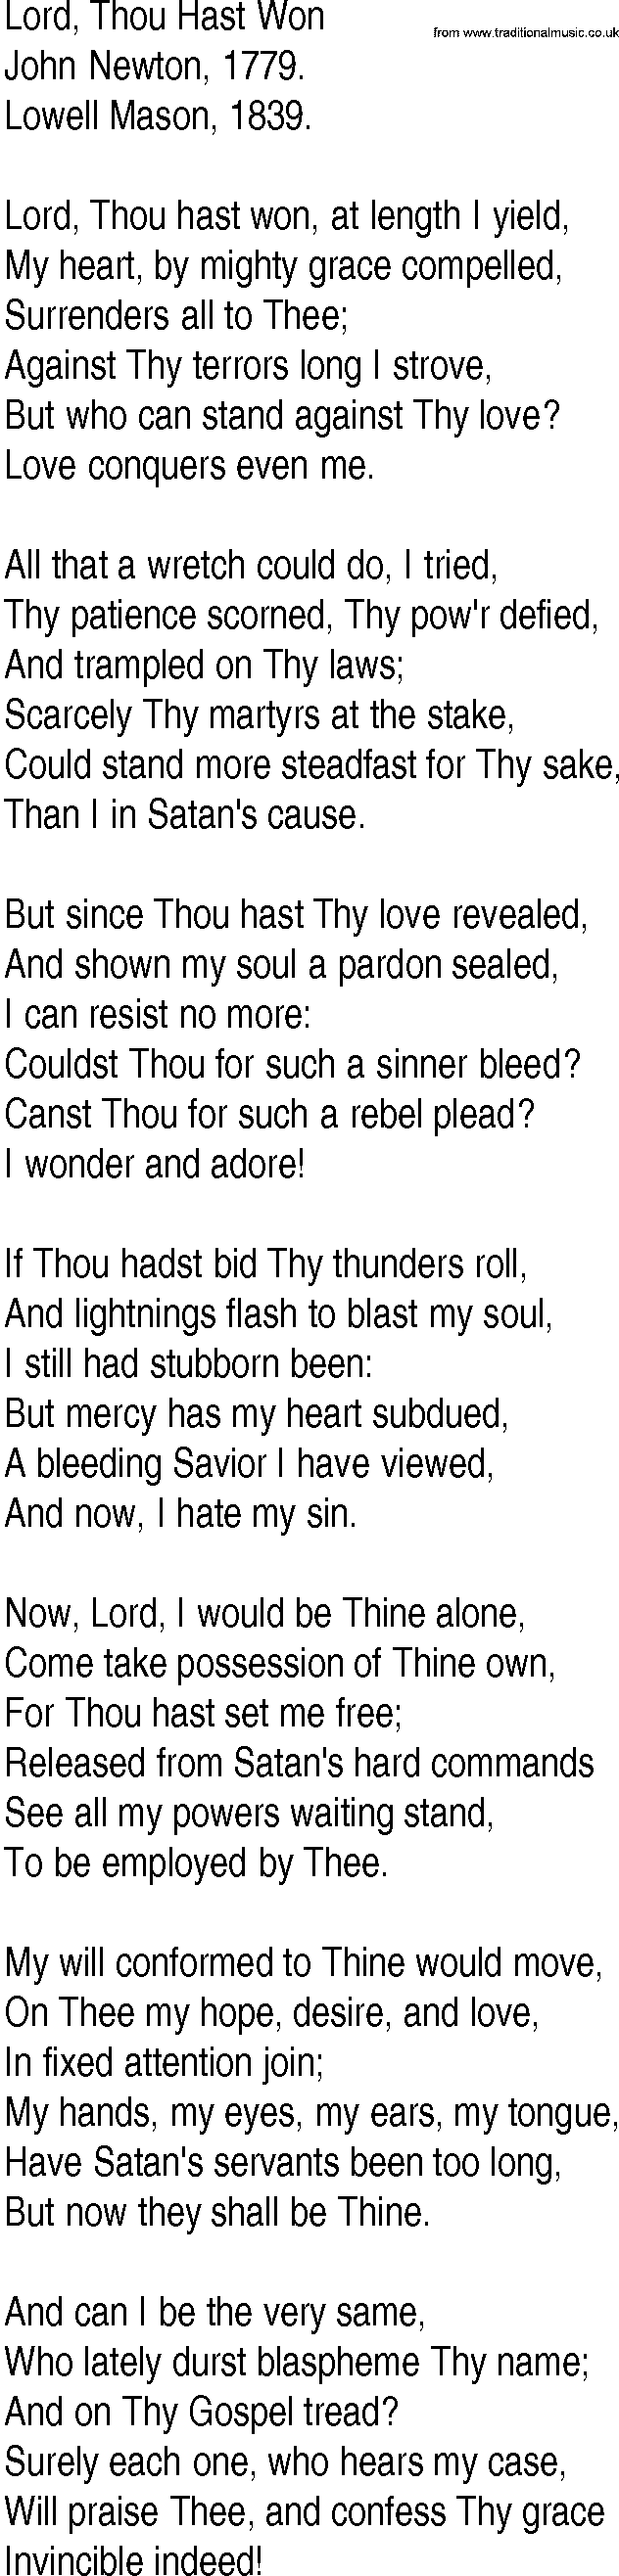 Hymn and Gospel Song: Lord, Thou Hast Won by John Newton lyrics